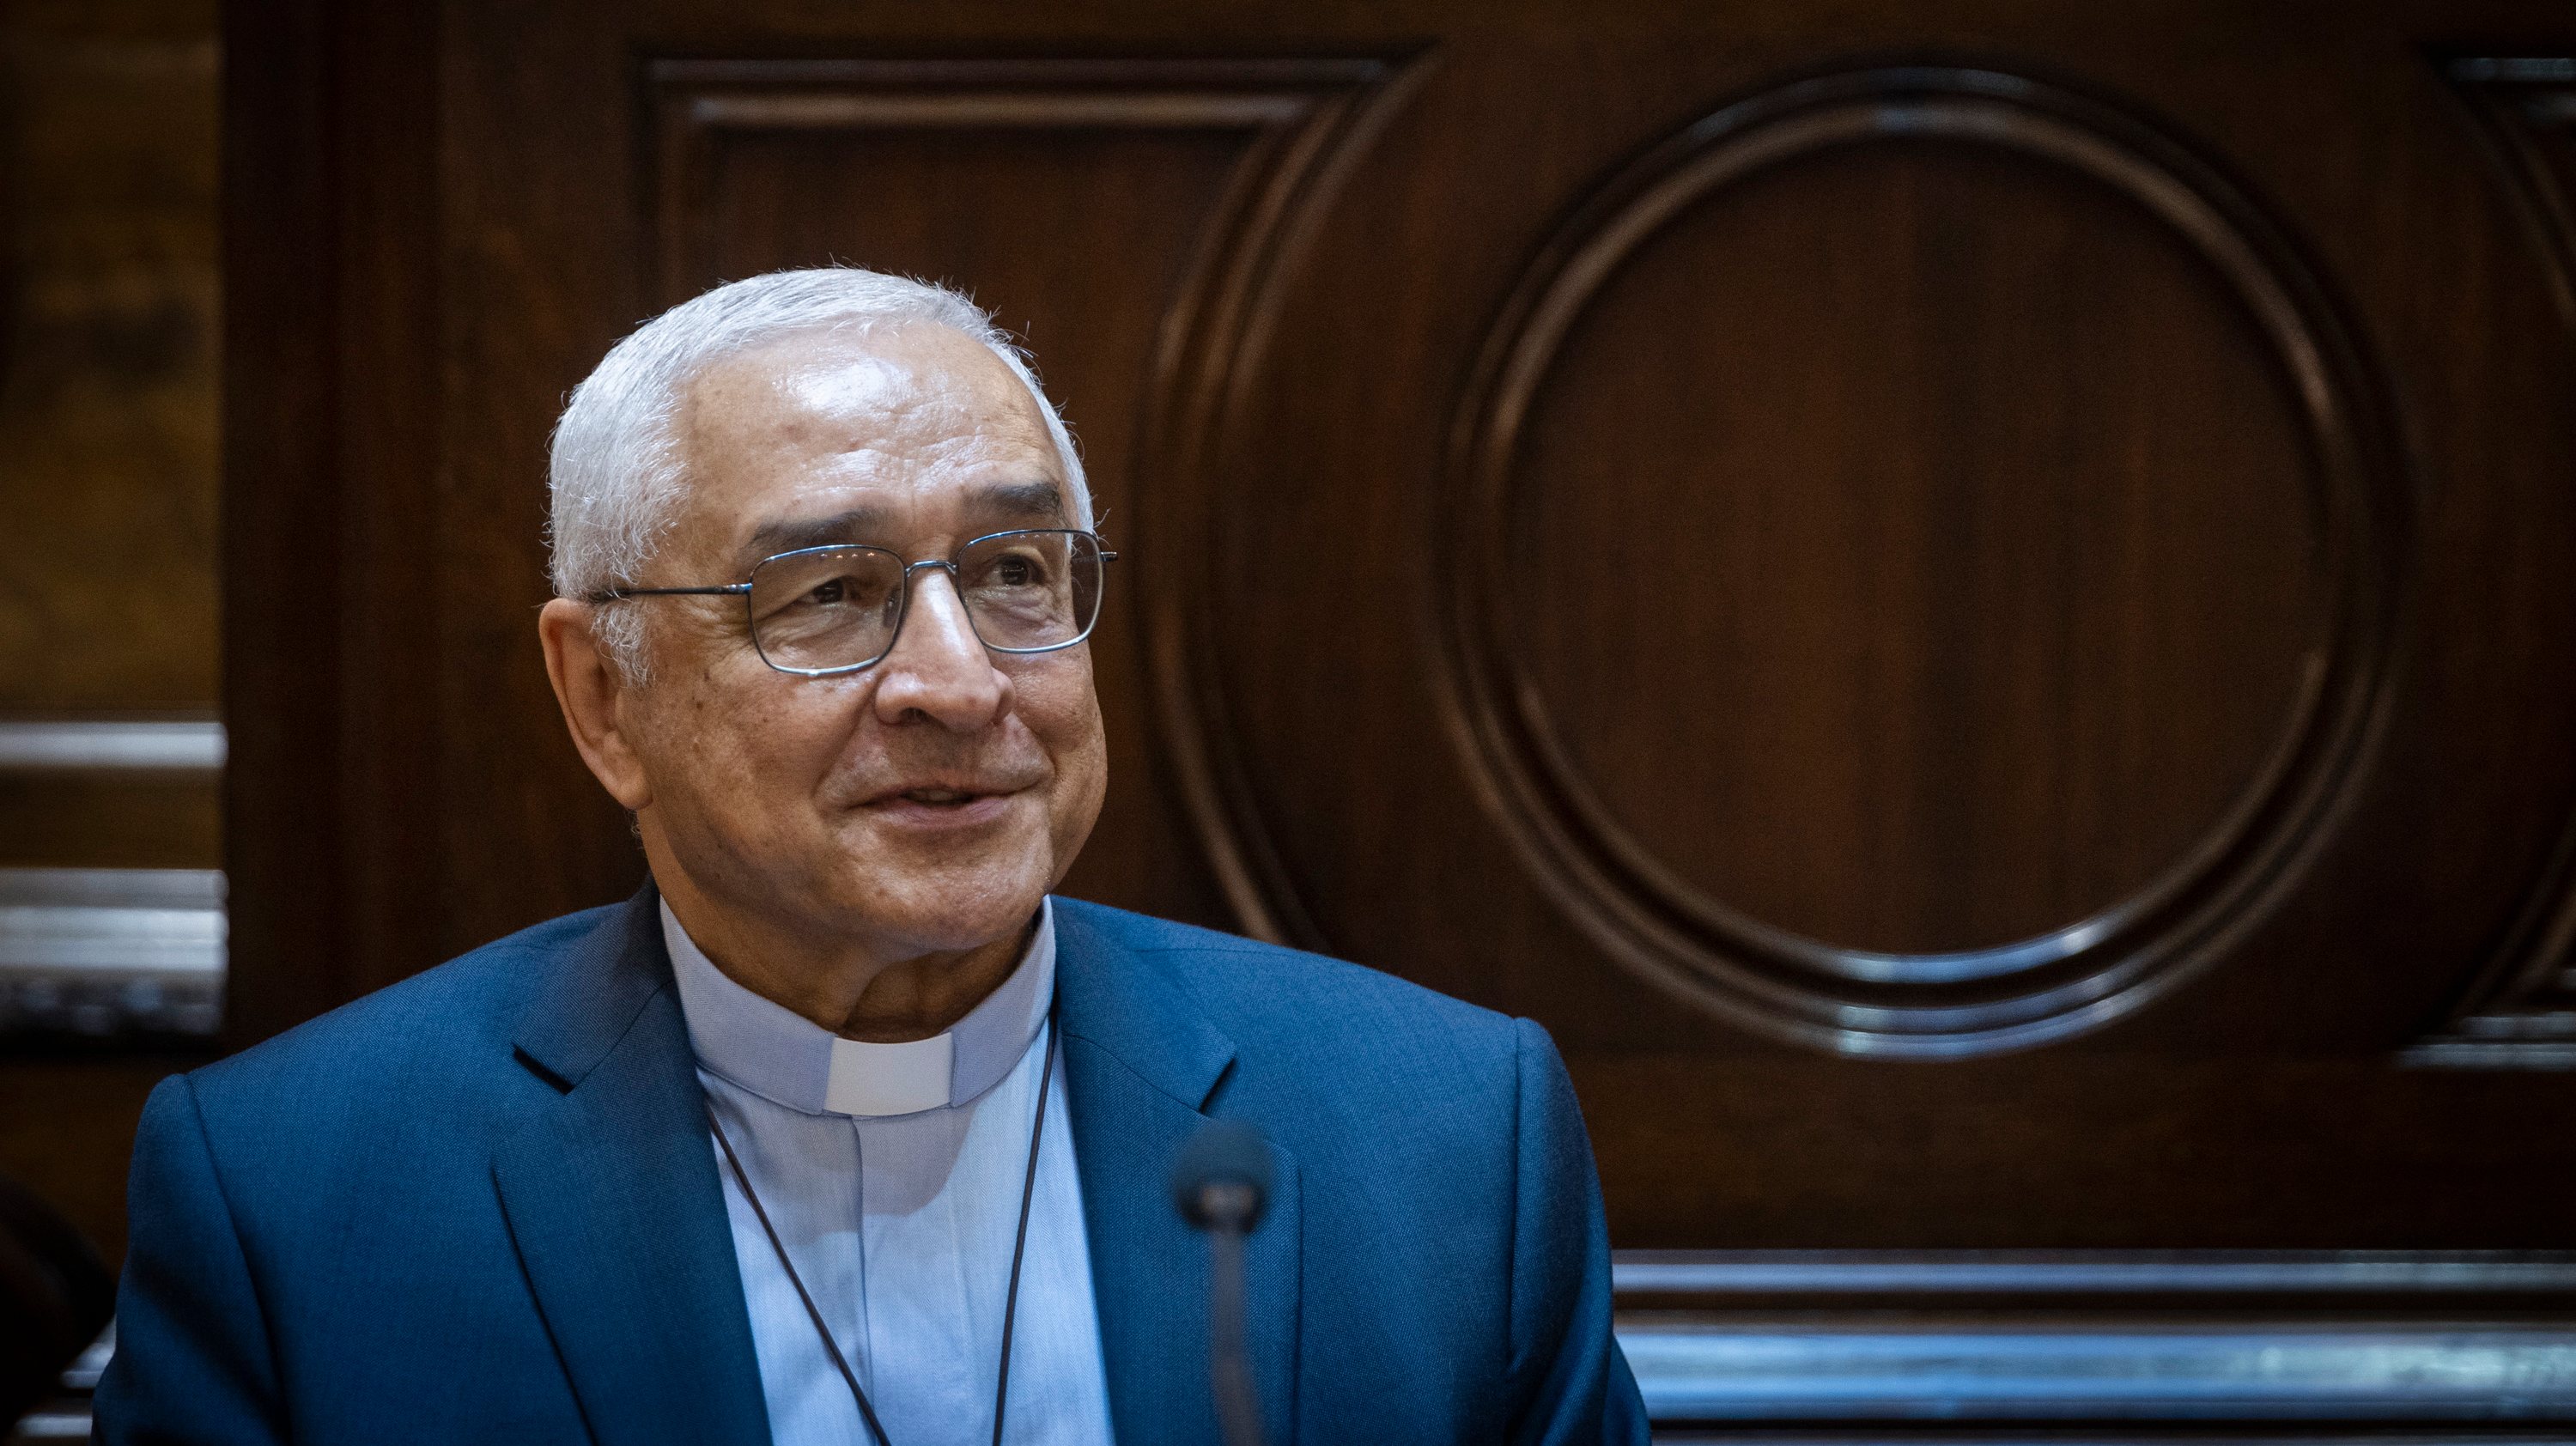 José Ornelas é o presidente da Conferência Episcopal Portuguesa desde 2020